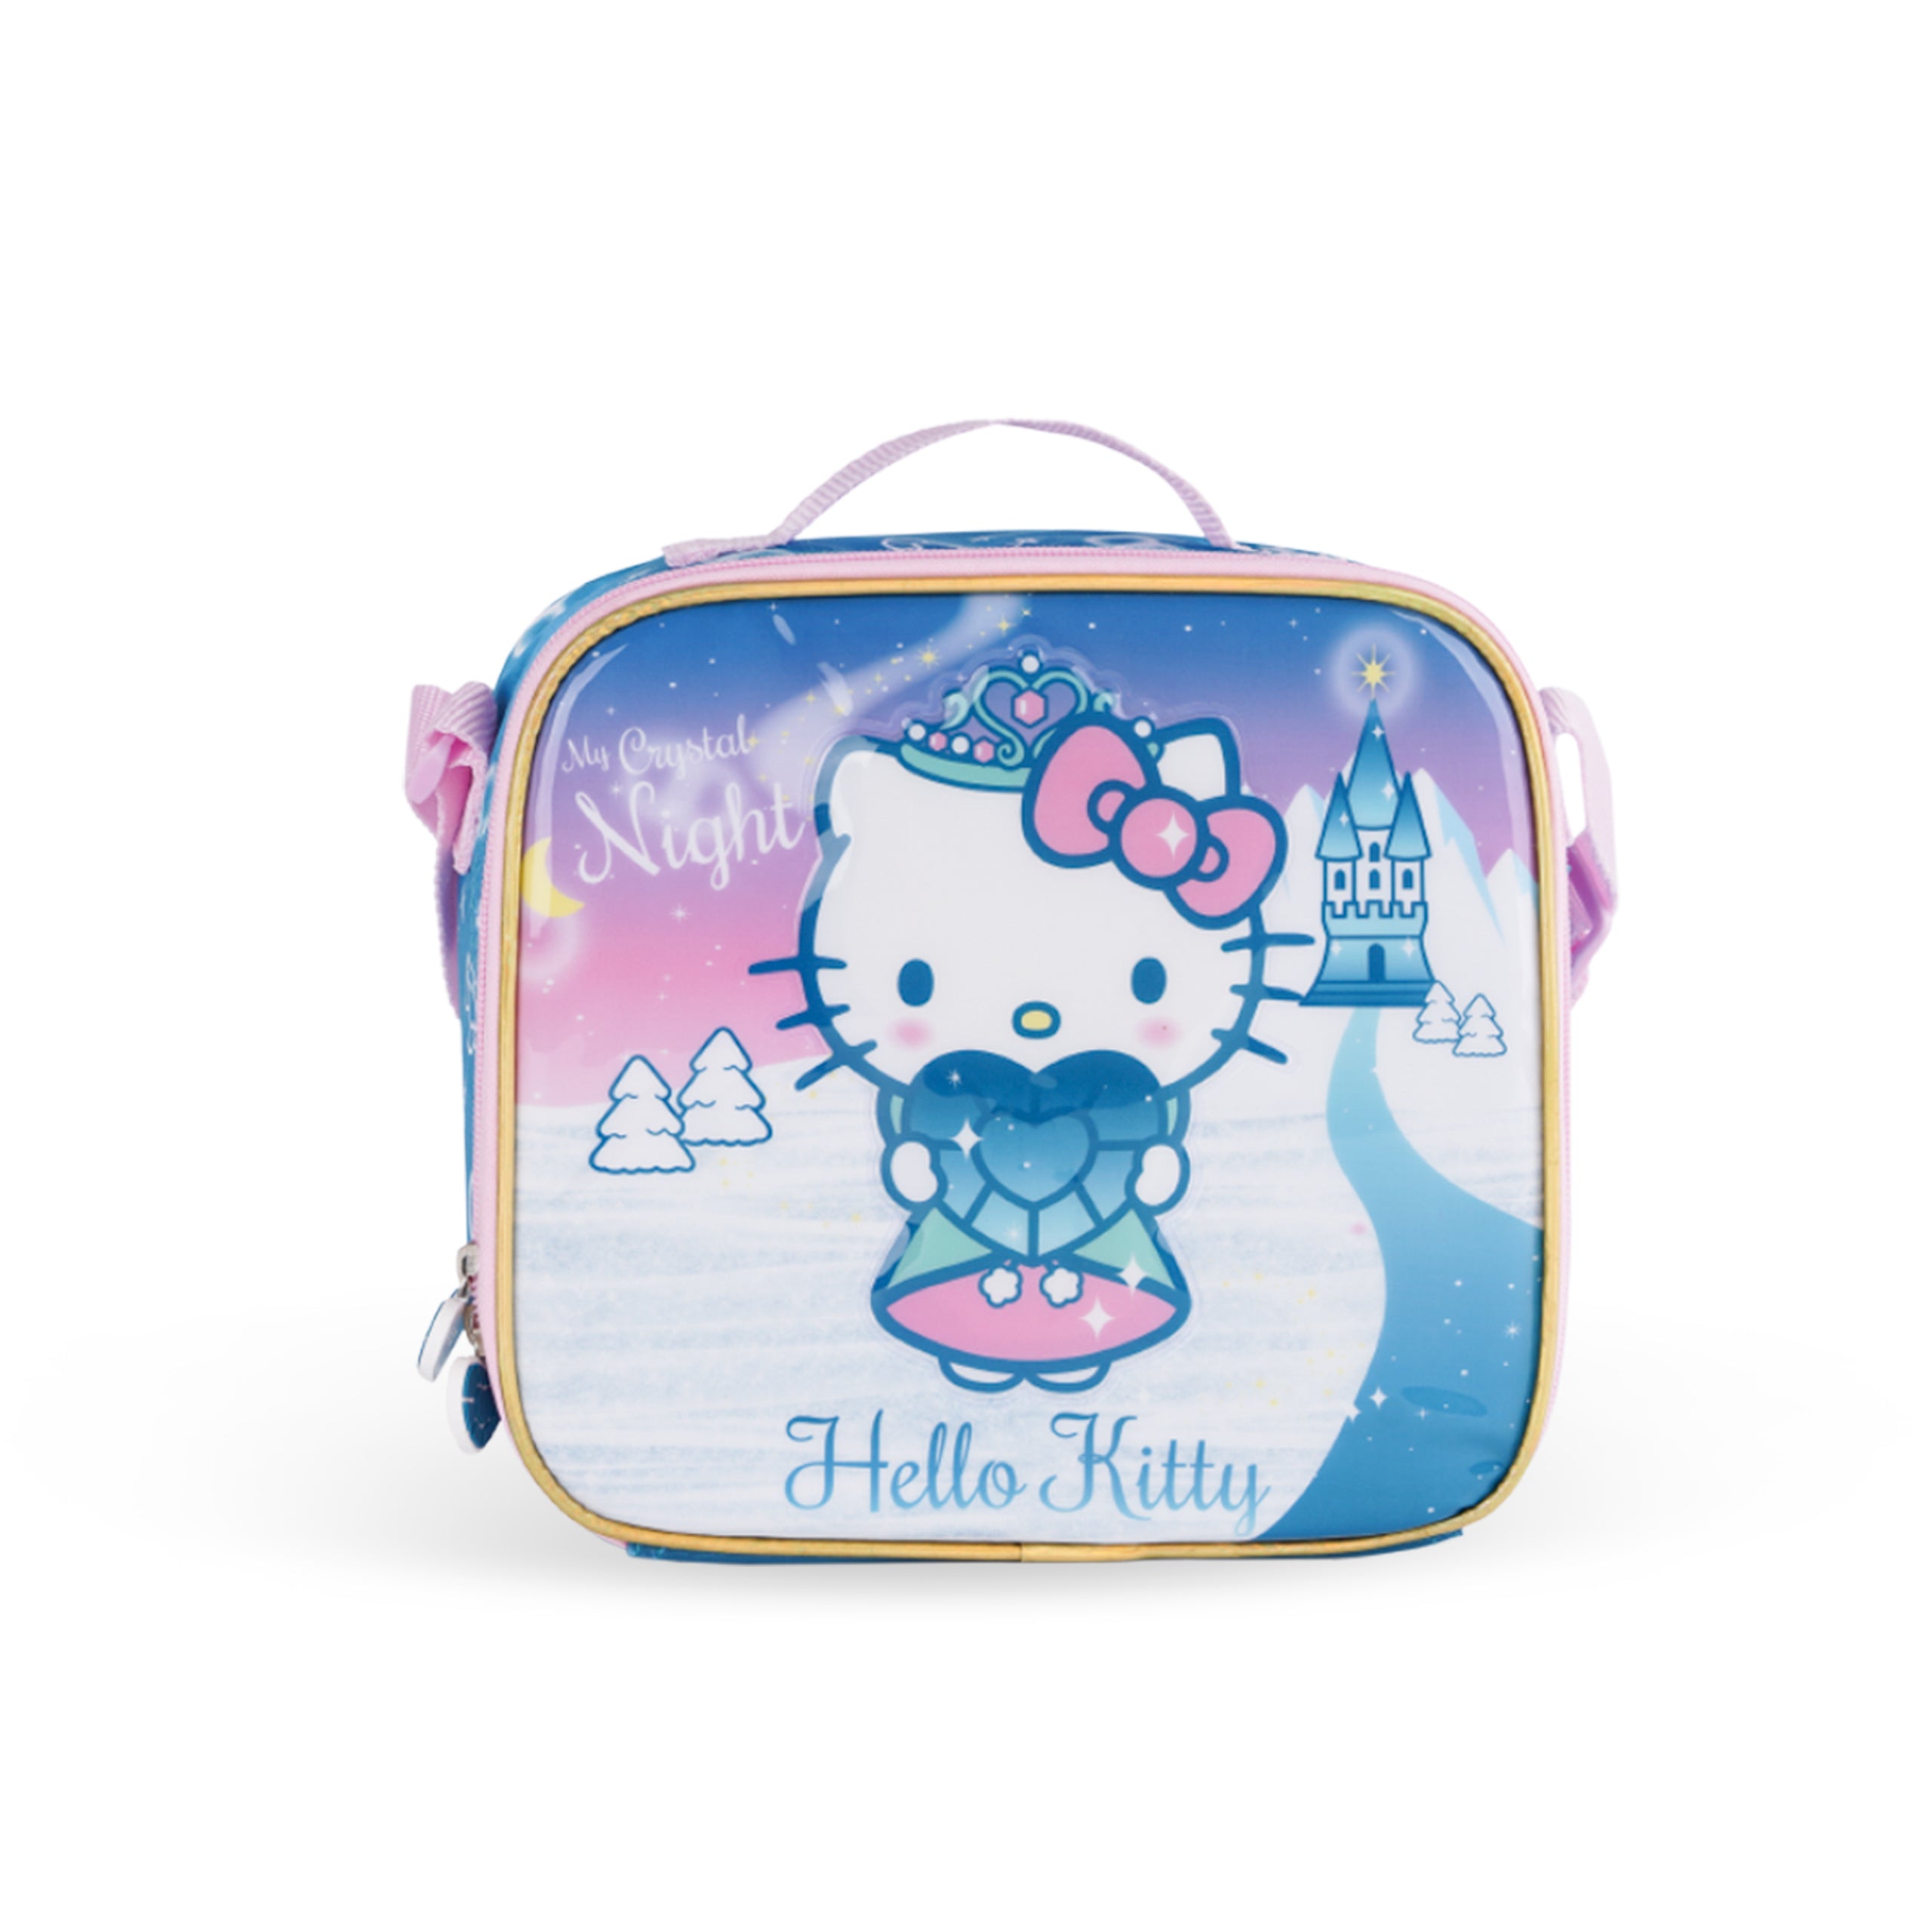 Sanrio Hello Kitty My Crystal Night 3in1 Trolley Box set 18"